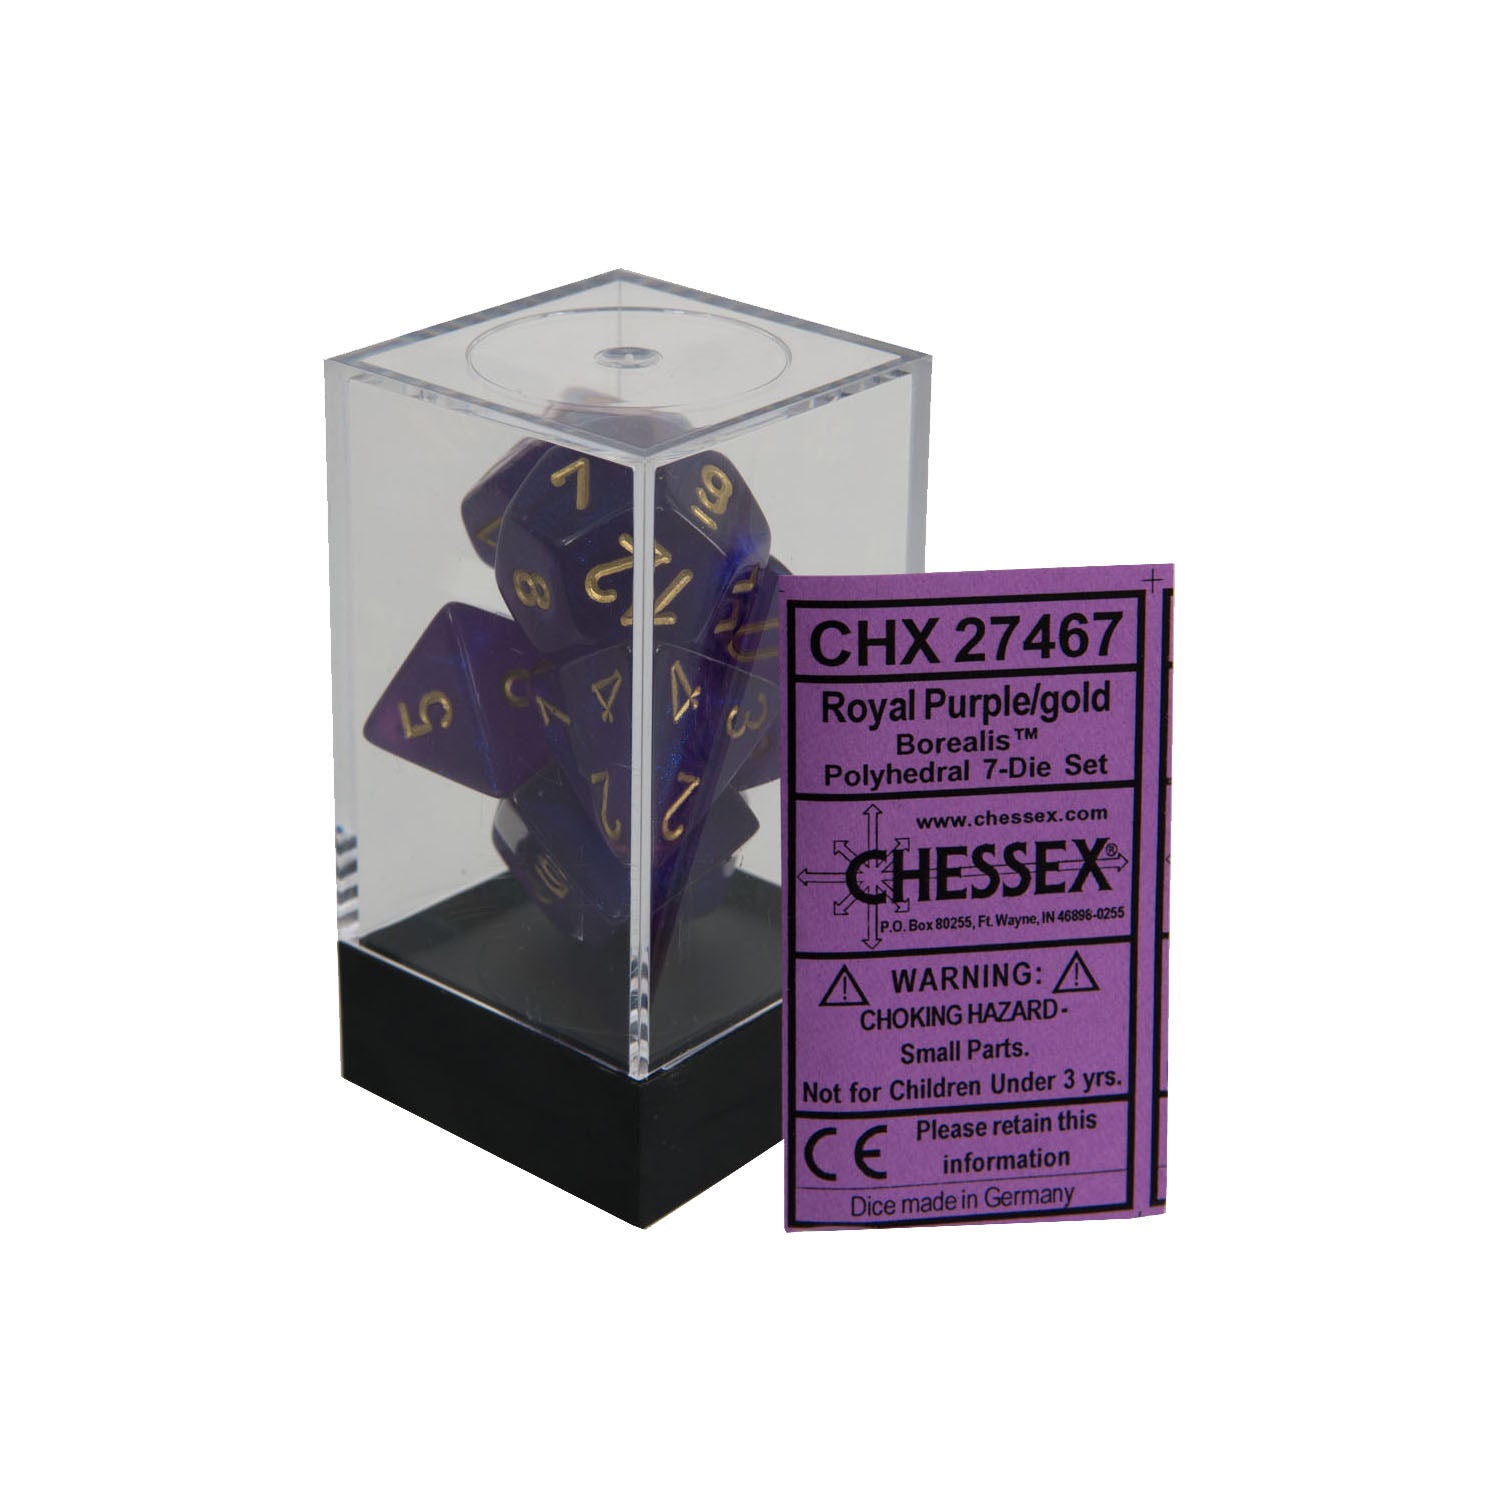 Chessex CHX27467 Royal Purple w/ gold Borealis™ Polyhedral Dice Set